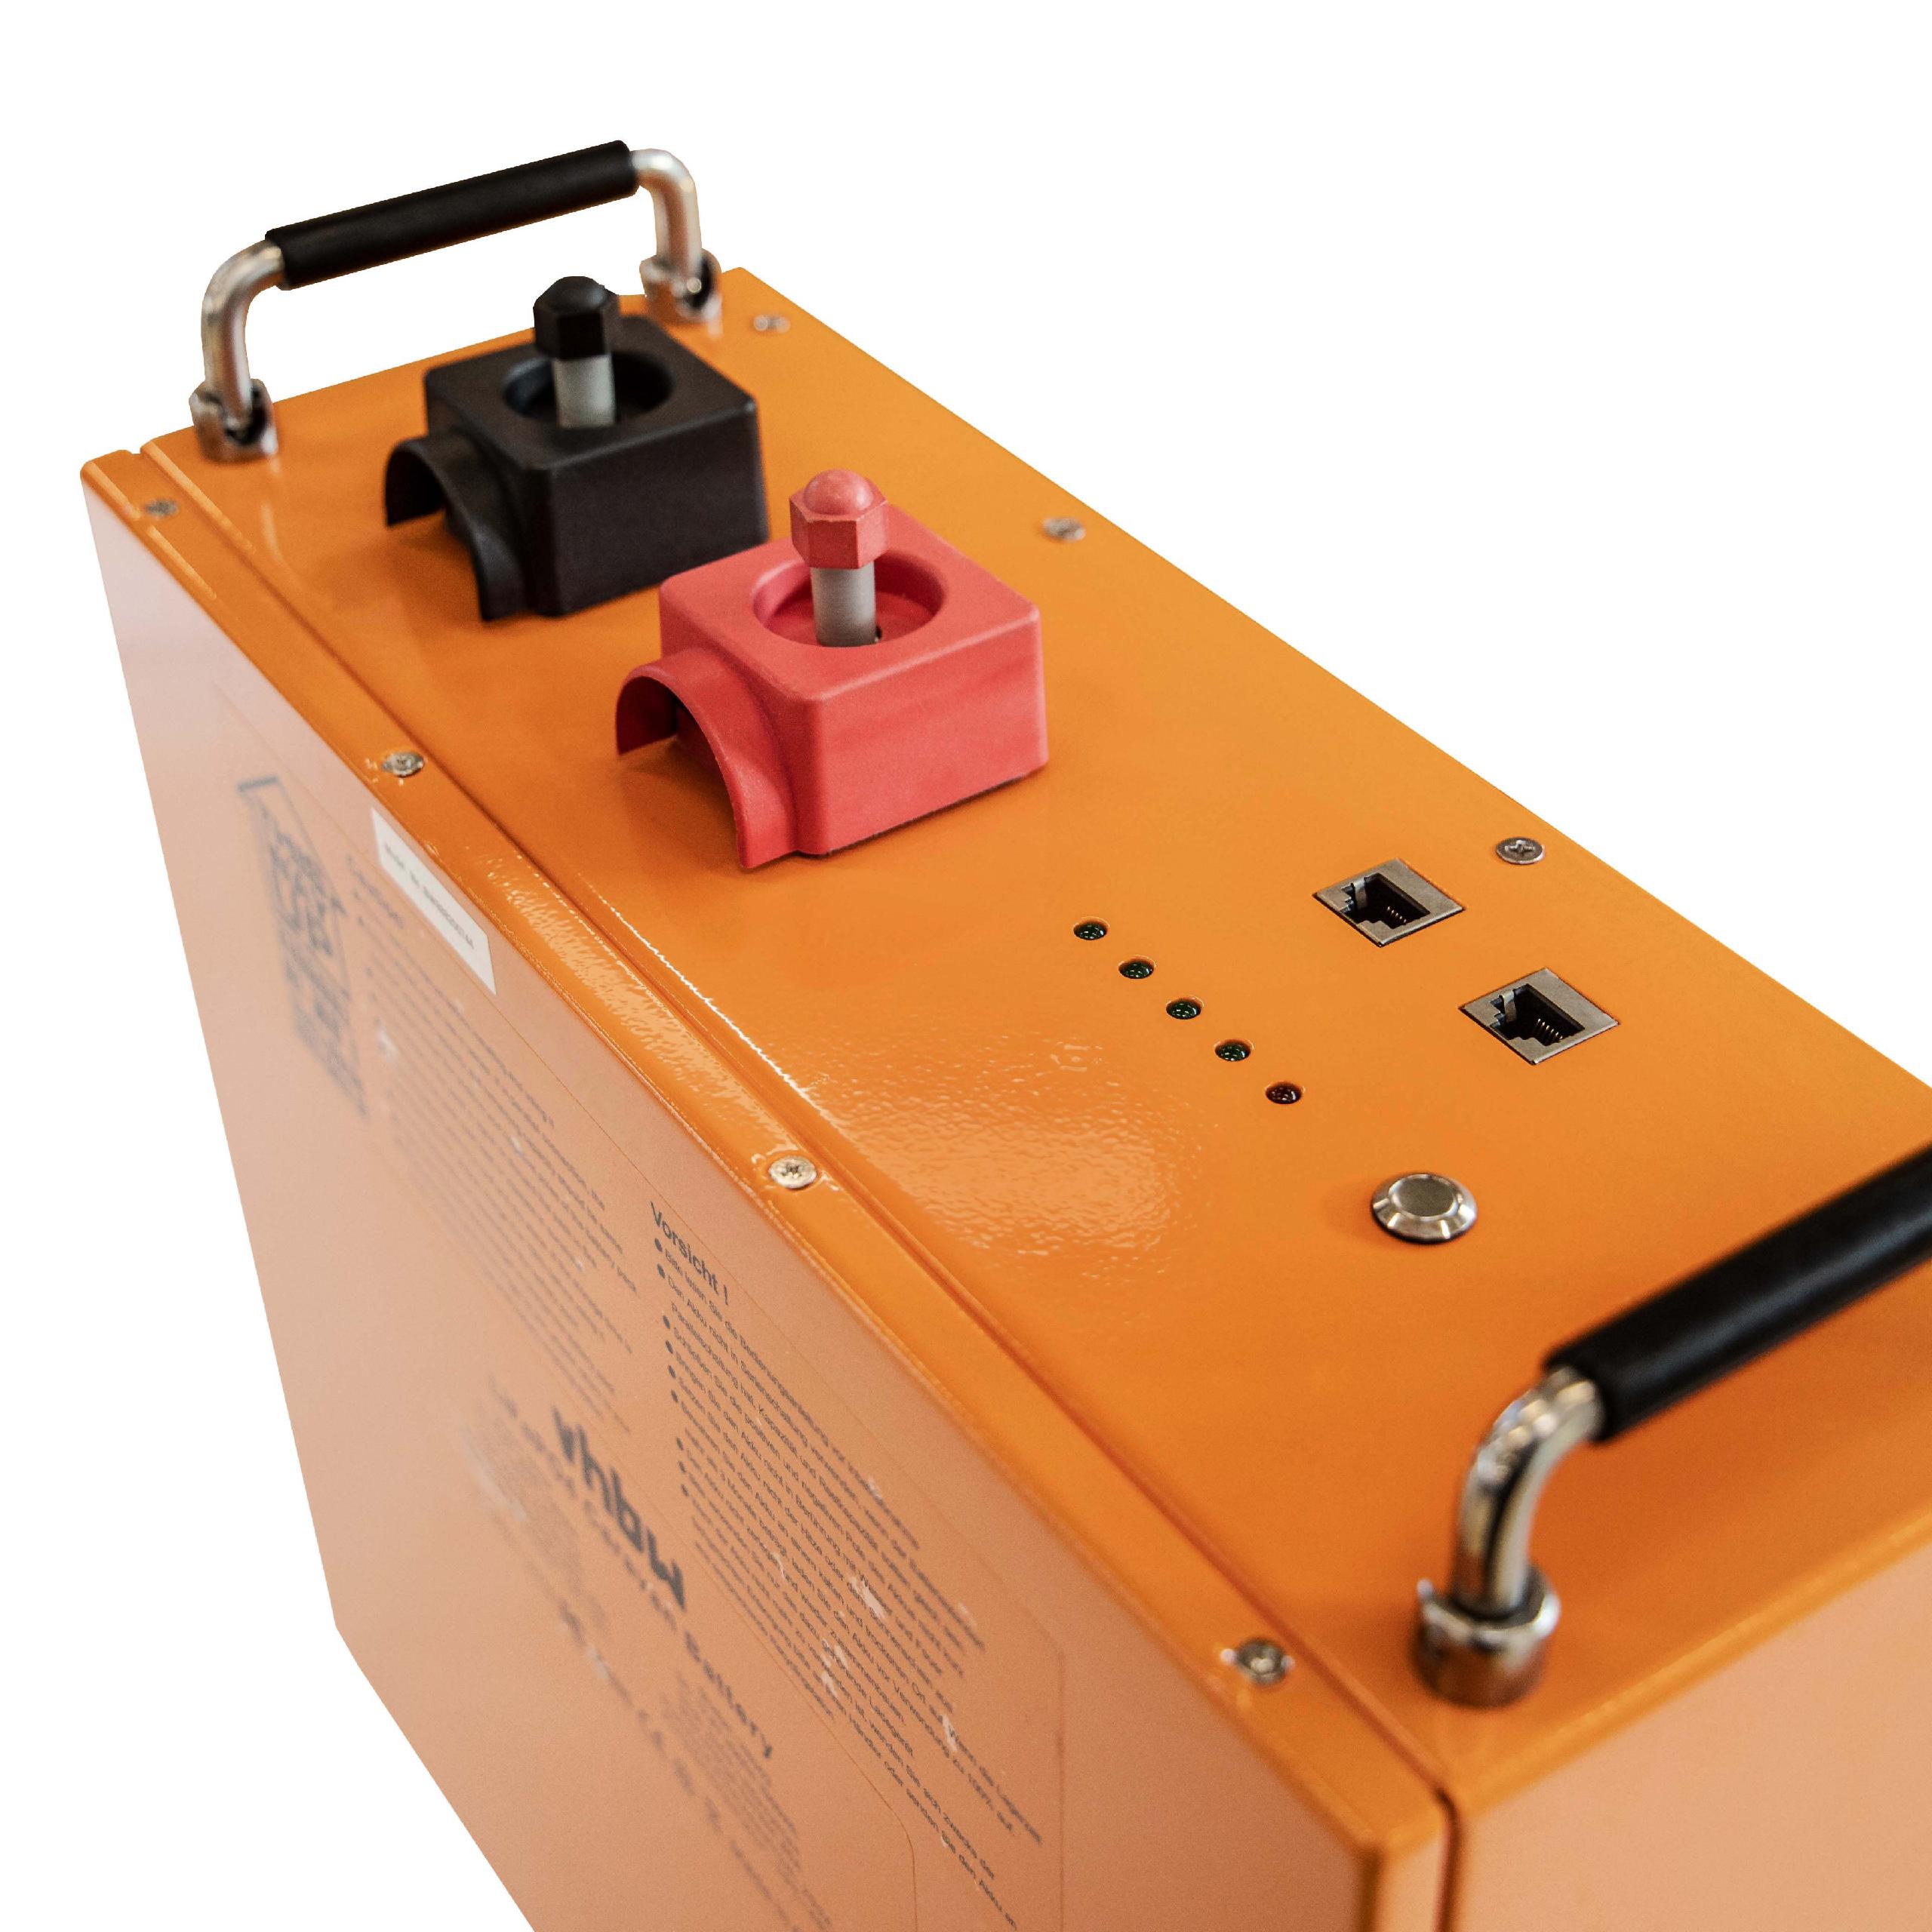 Bordbatterie Akku passend für Wohnwagen, Boot, Camping, Wohnmobil, Solaranlage - 258 Ah, 12,8 V, LiFePO4